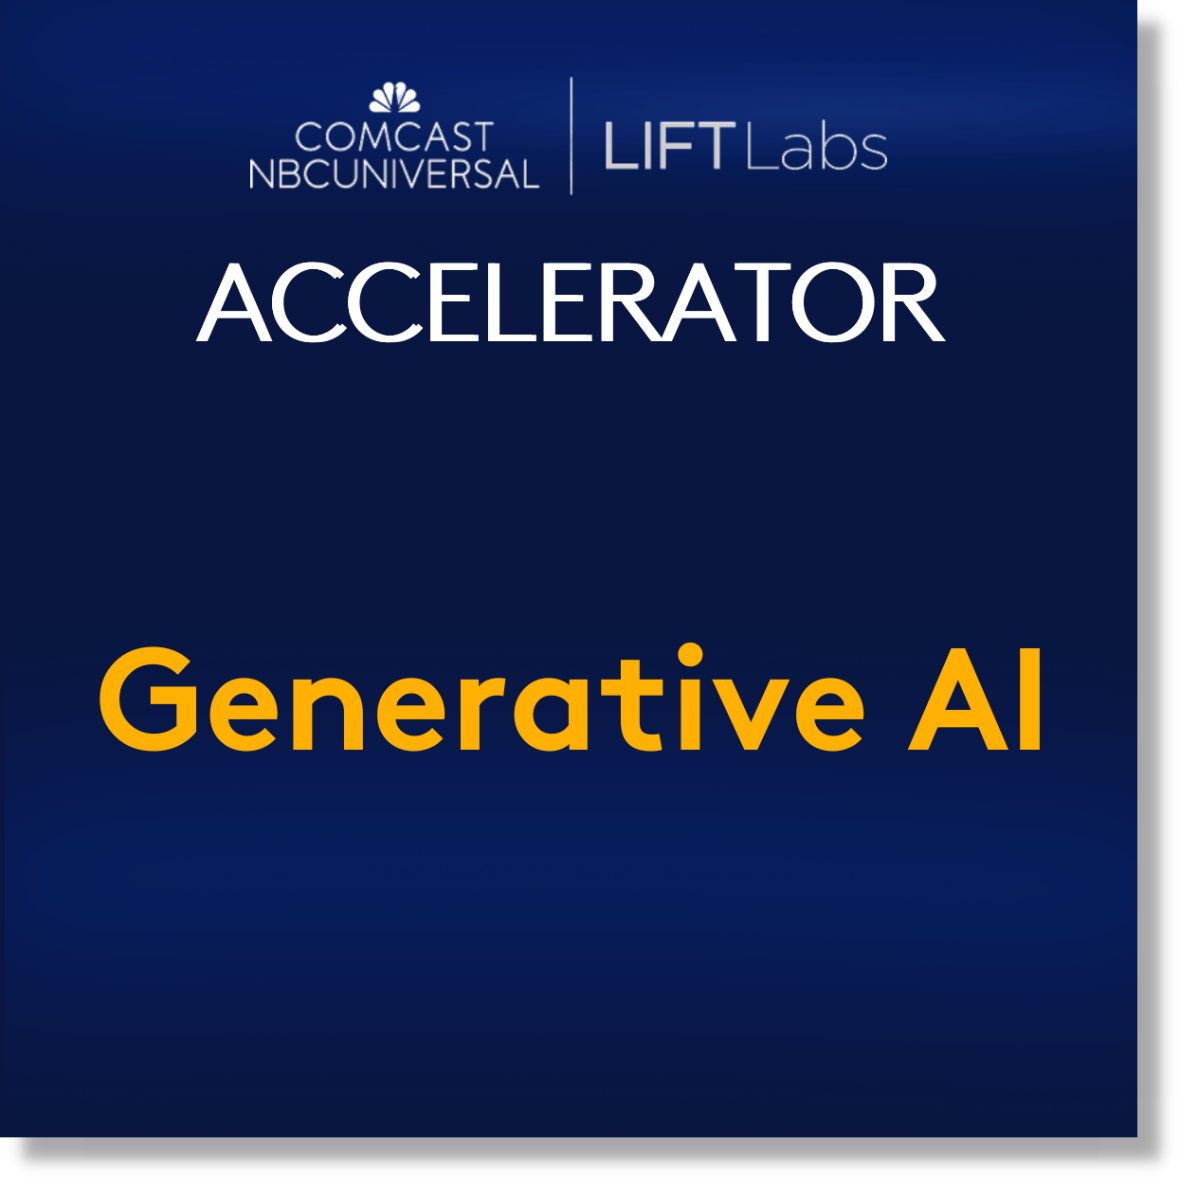 Comcast NBC Universal LIFT Labs Accelerator Generative AI